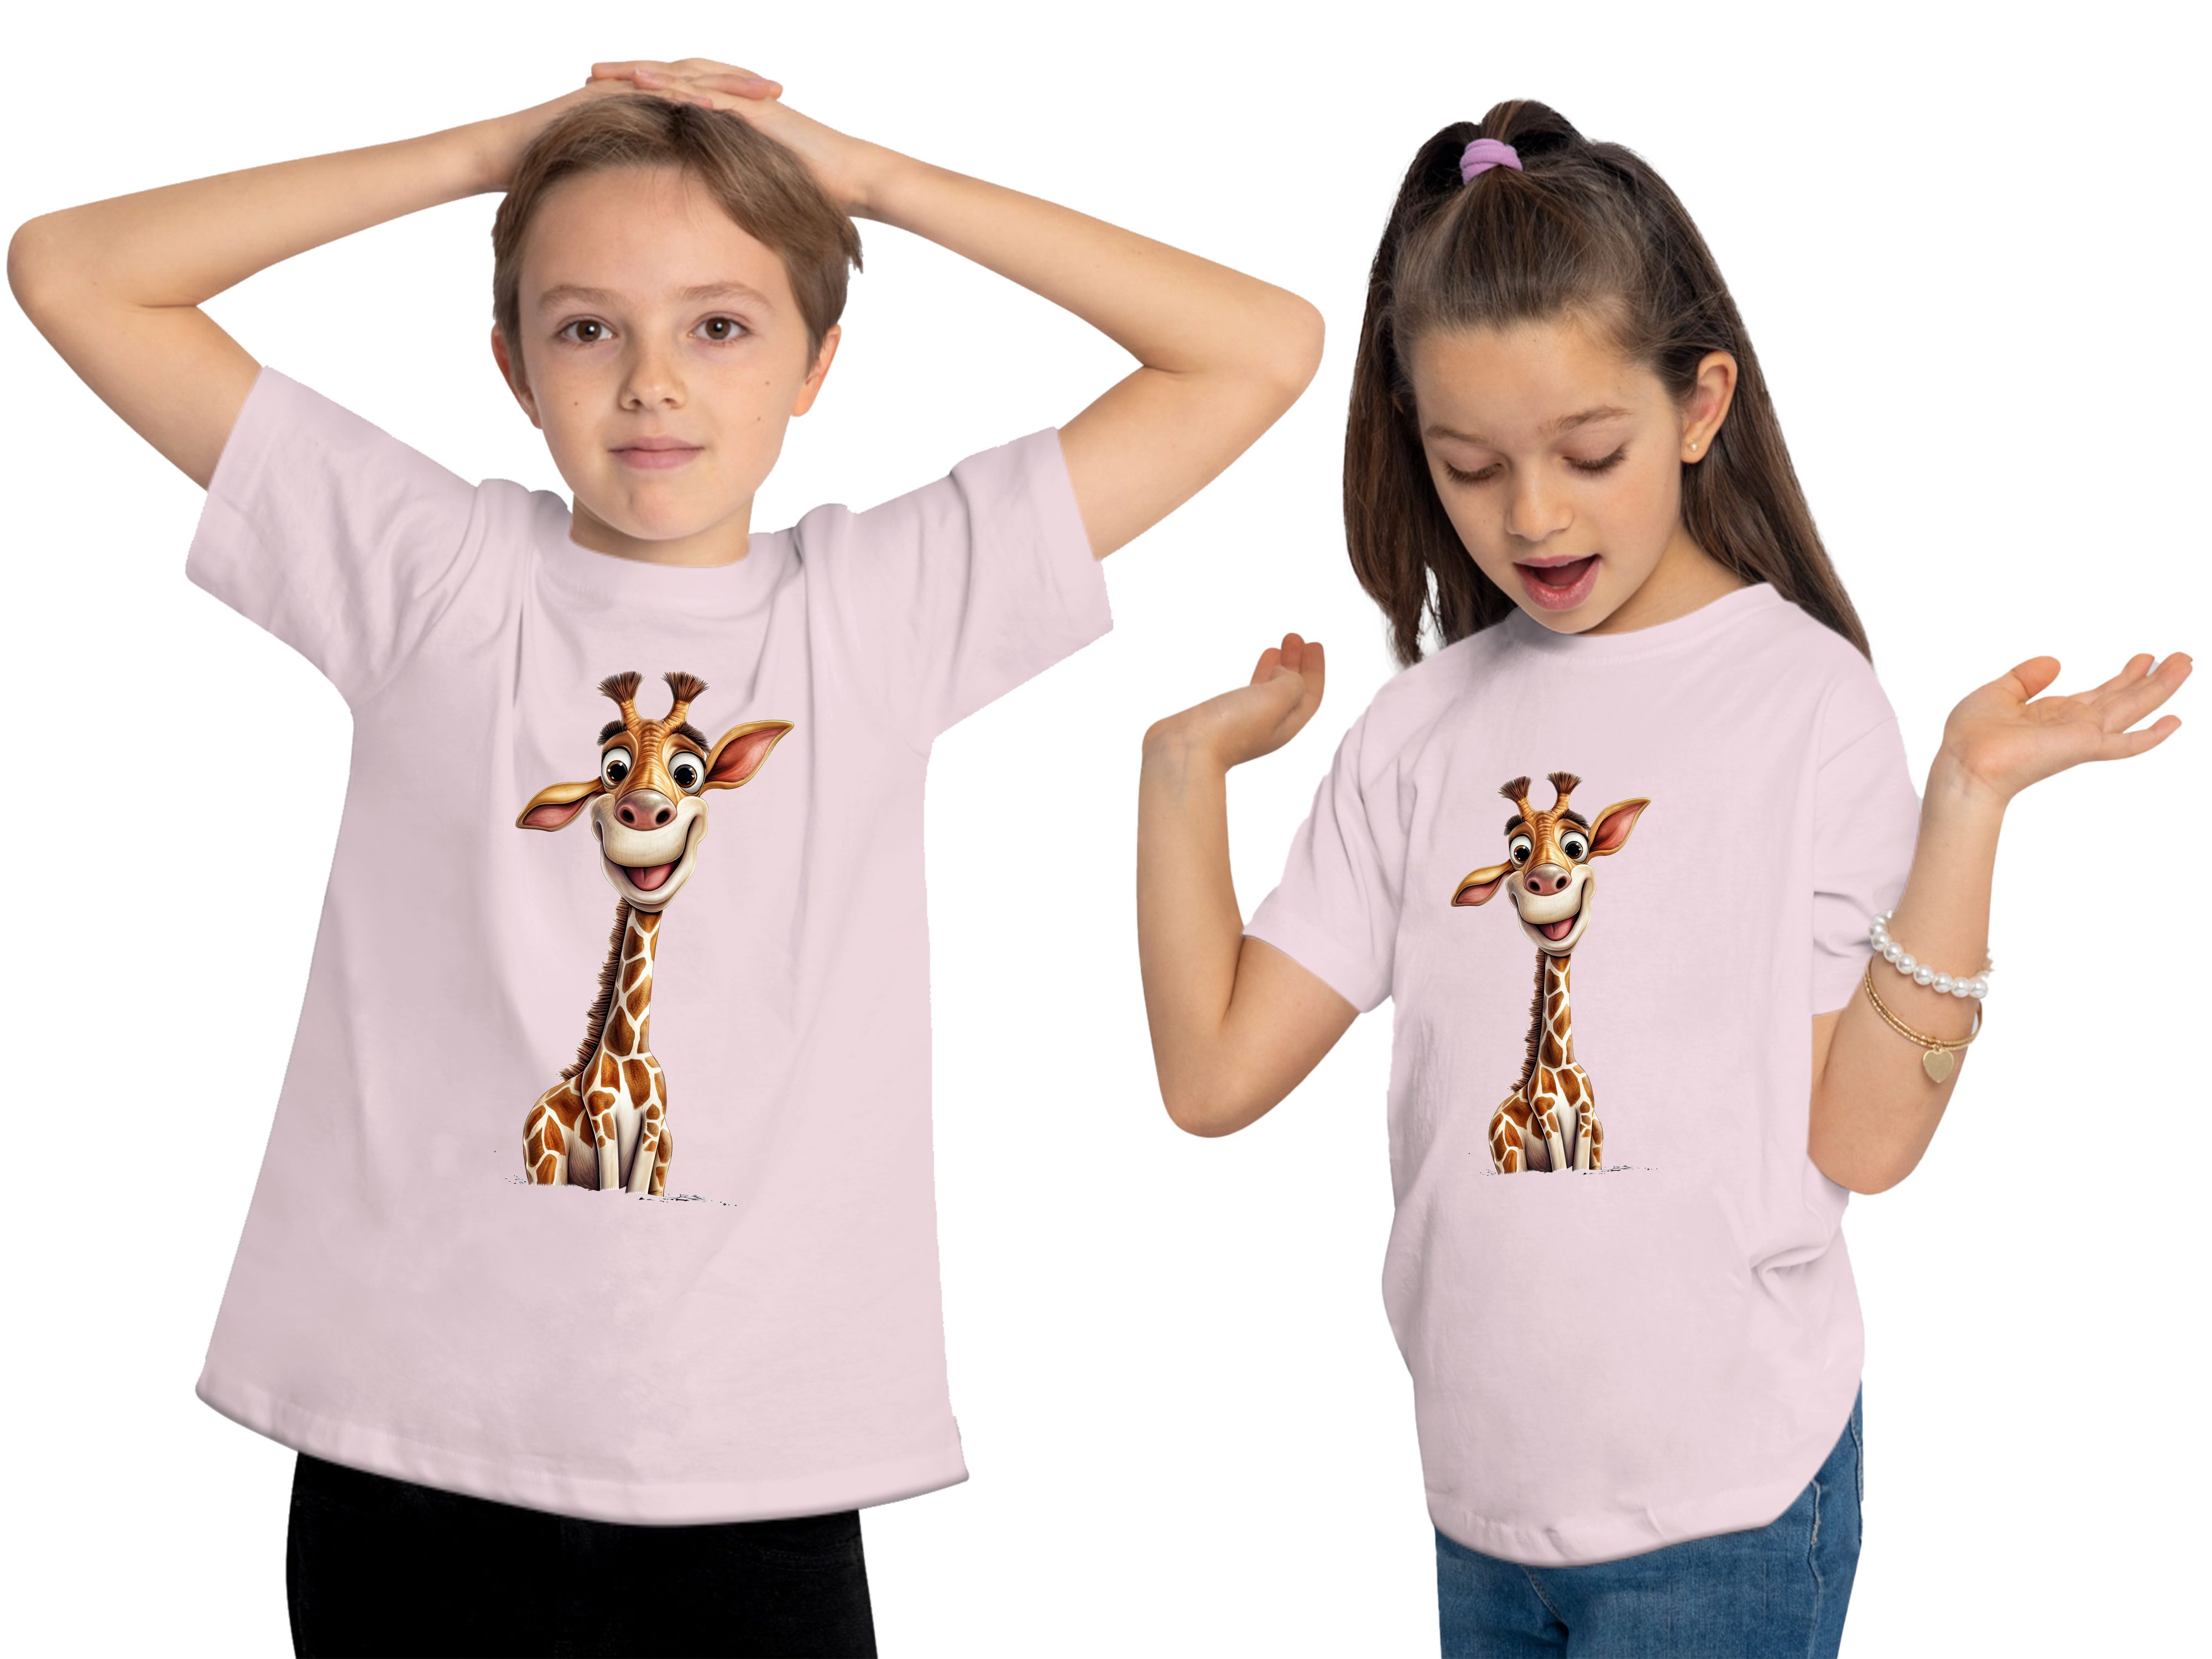 MyDesign24 T-Shirt Print Wildtier - mit Giraffe Baumwollshirt Aufdruck, bedruckt Kinder i273 rosa Shirt Baby